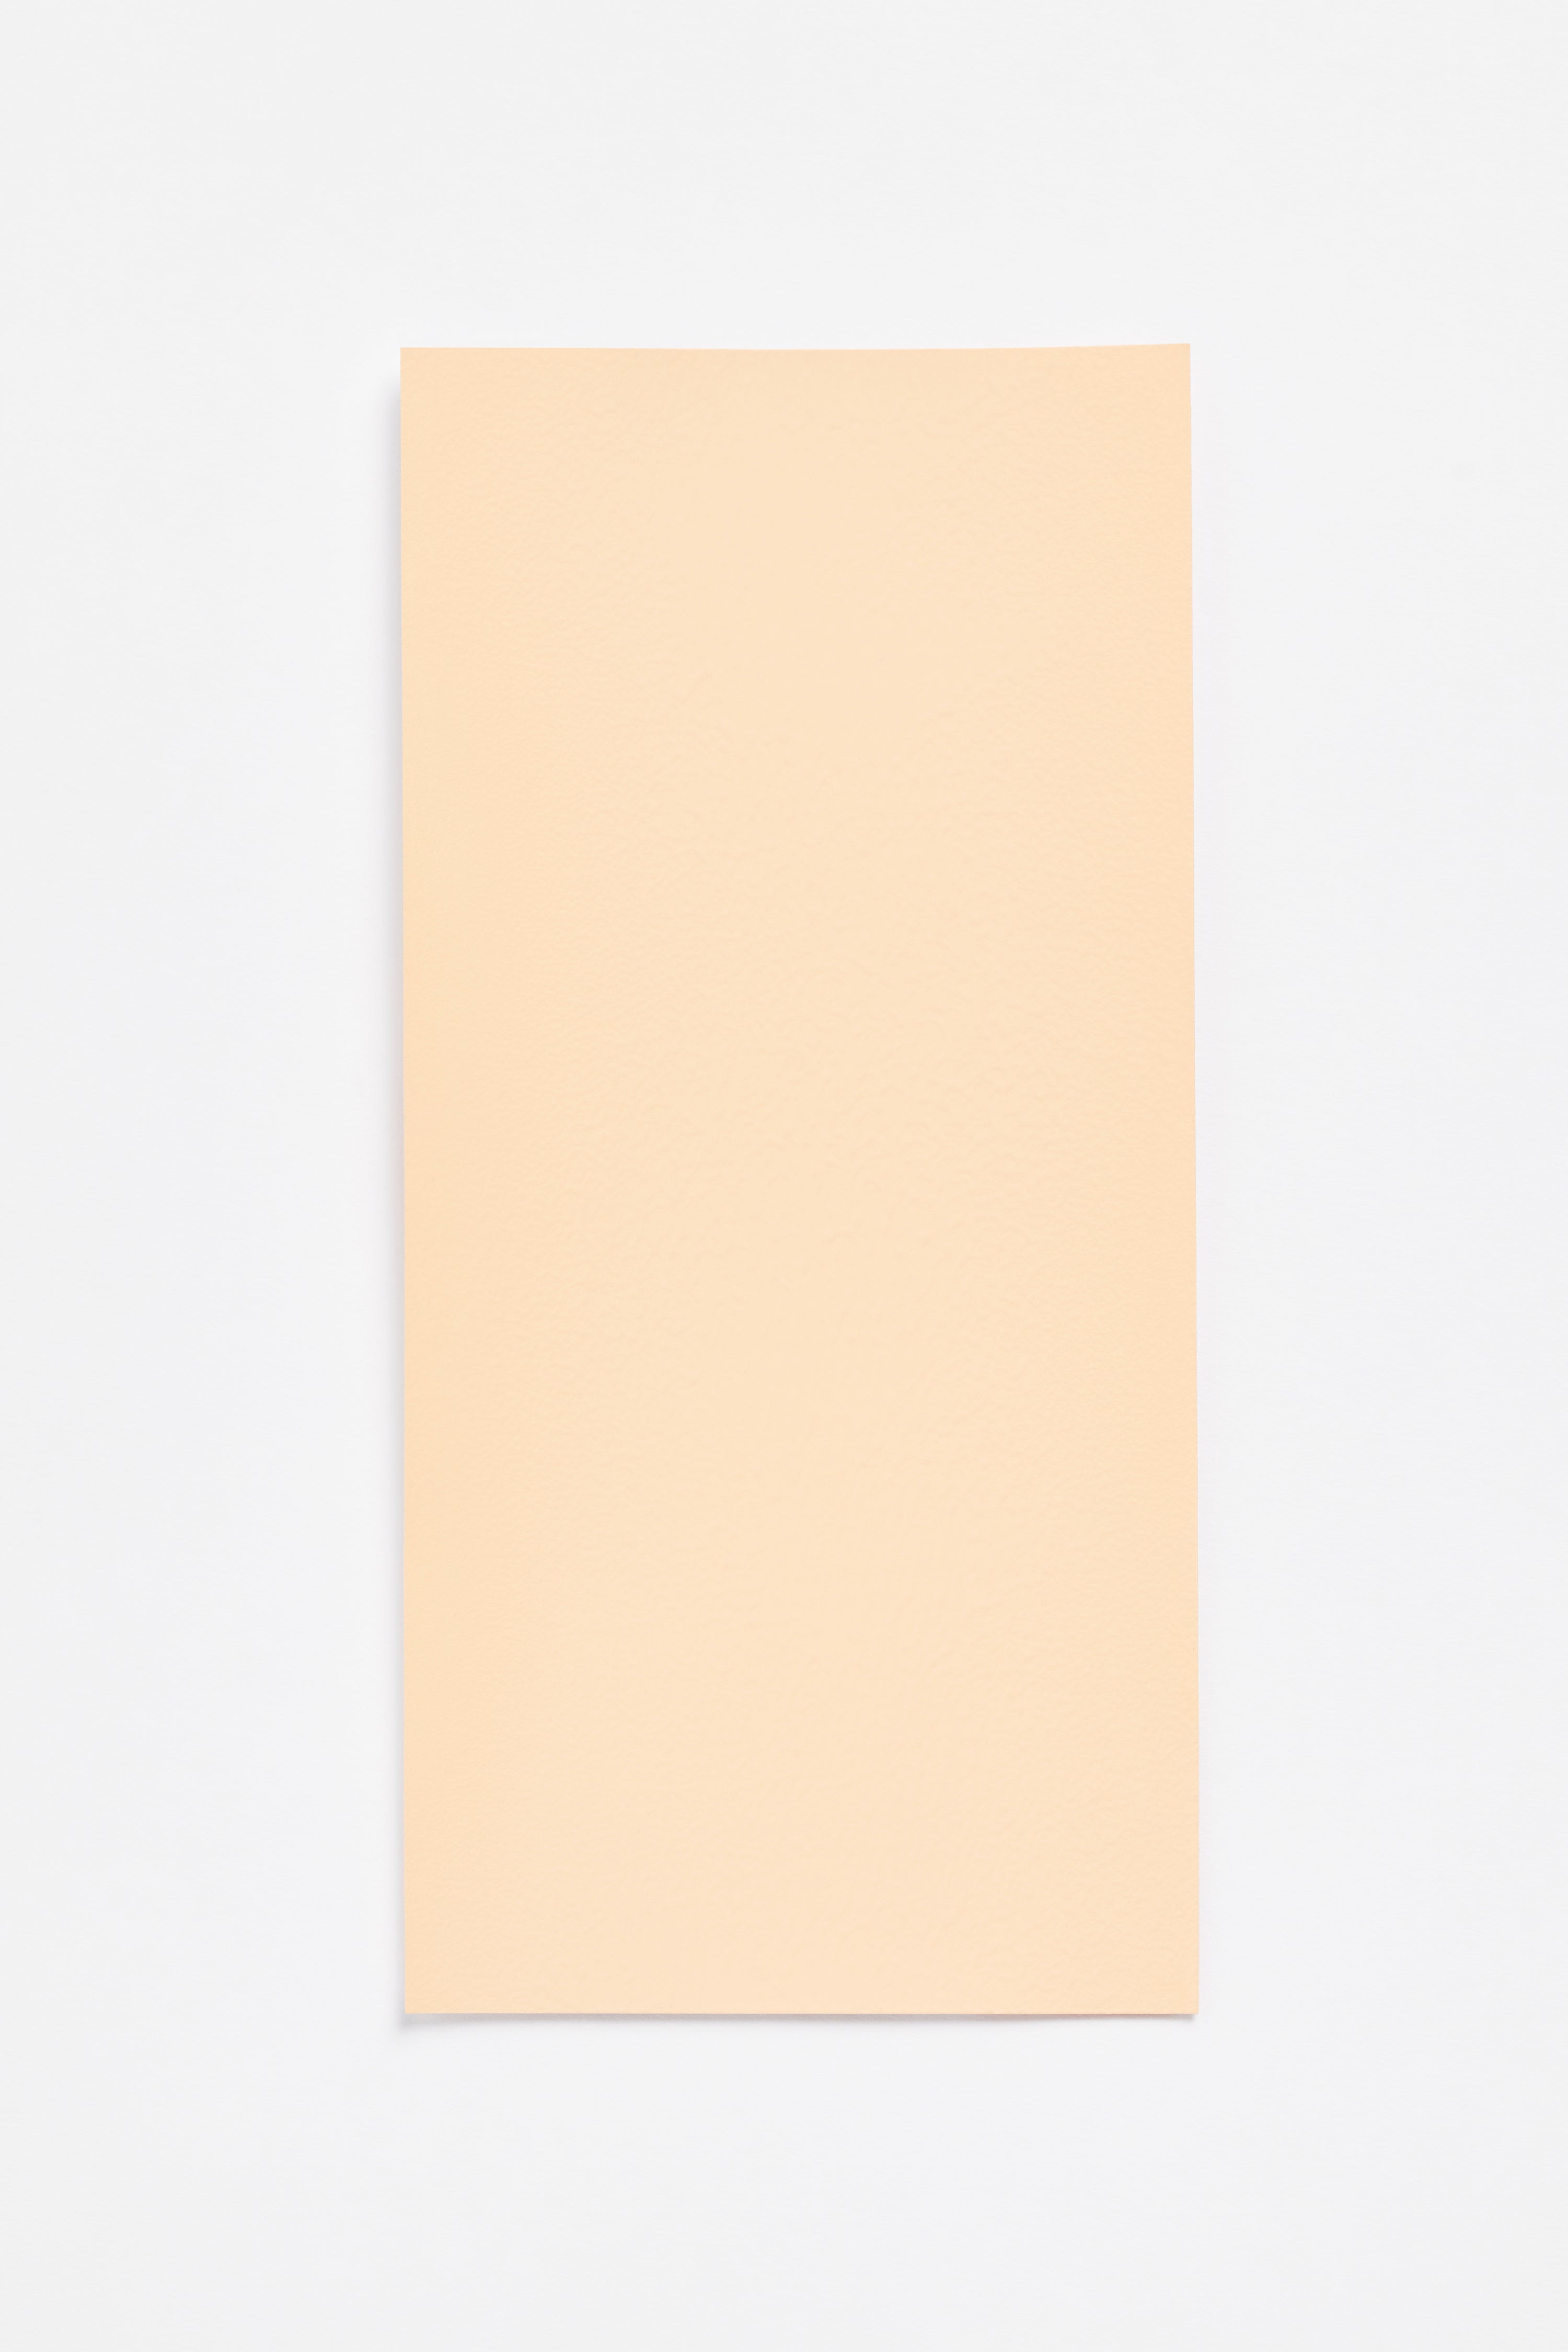 Coquille St. Jacques — a paint colour developed by Inga Sempé for Blēo